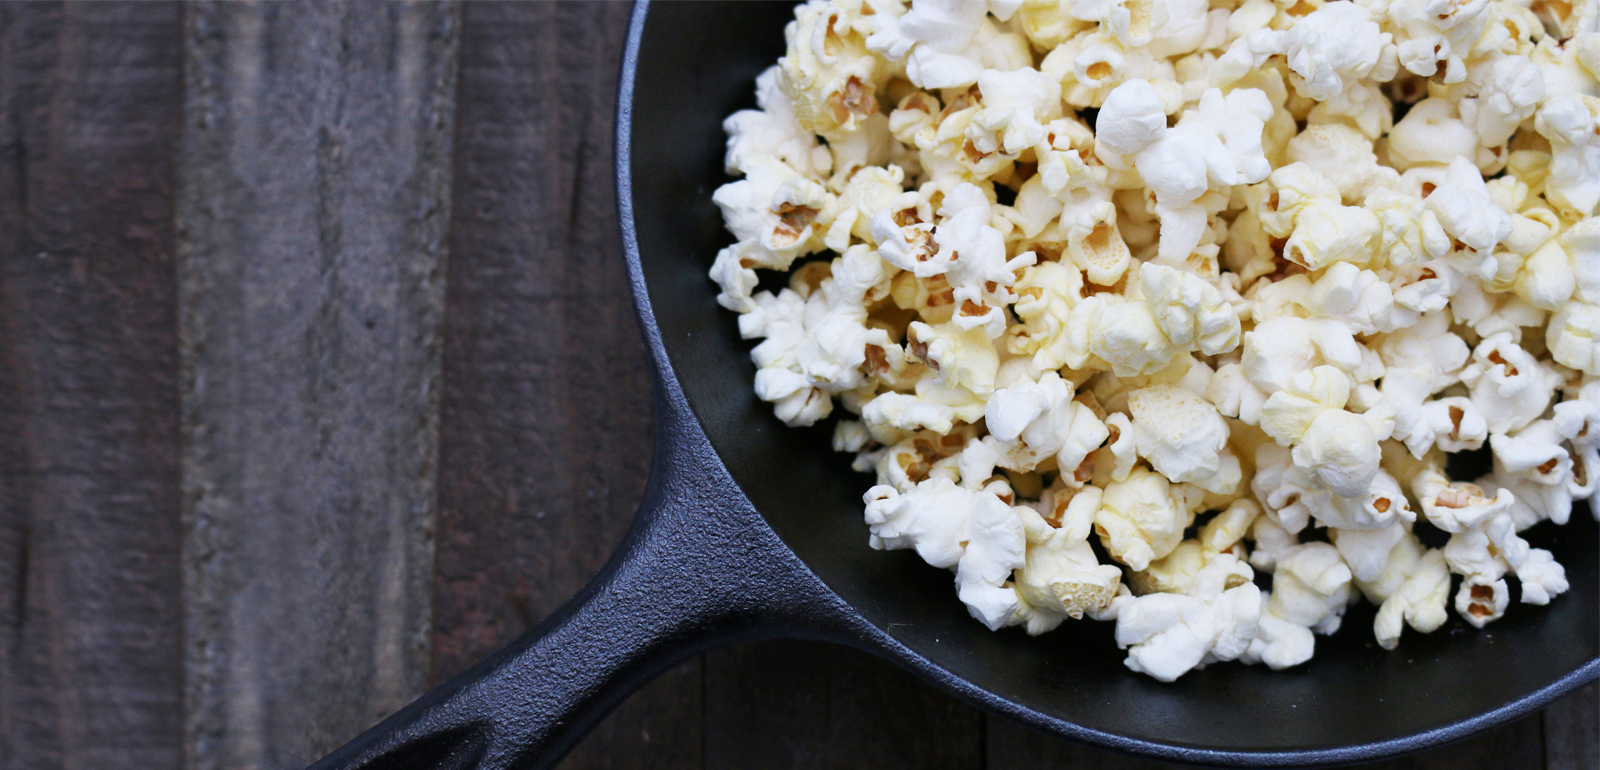 Peg's Microwave Popcorn Popper – Peg's Salt